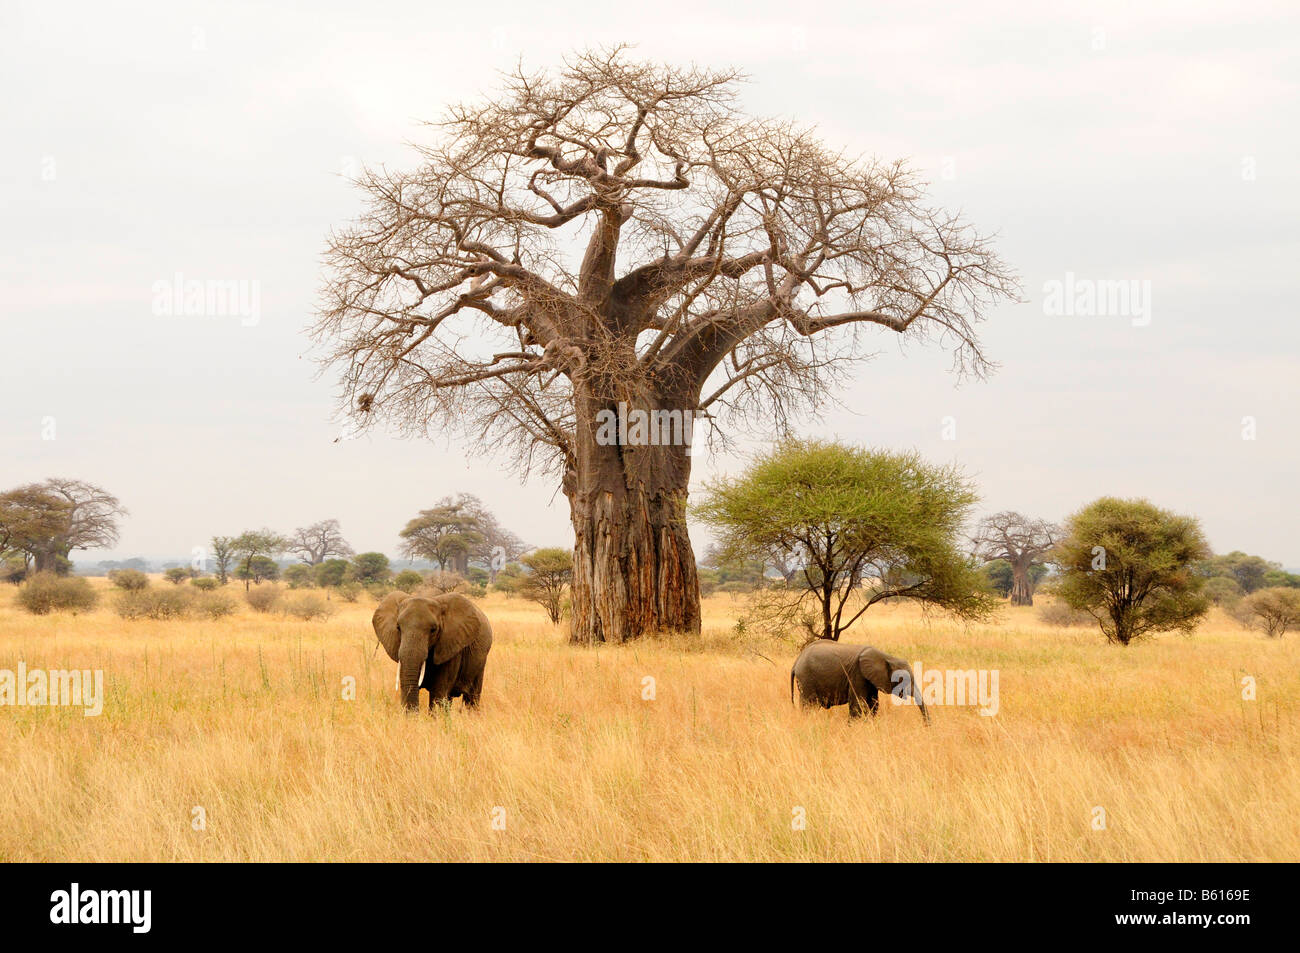 Bush Elefantes Africanos (Loxodonta africana) bajo un árbol baobab (Adansonia digitata), Tarangire-National Park, Tanzania, África Foto de stock